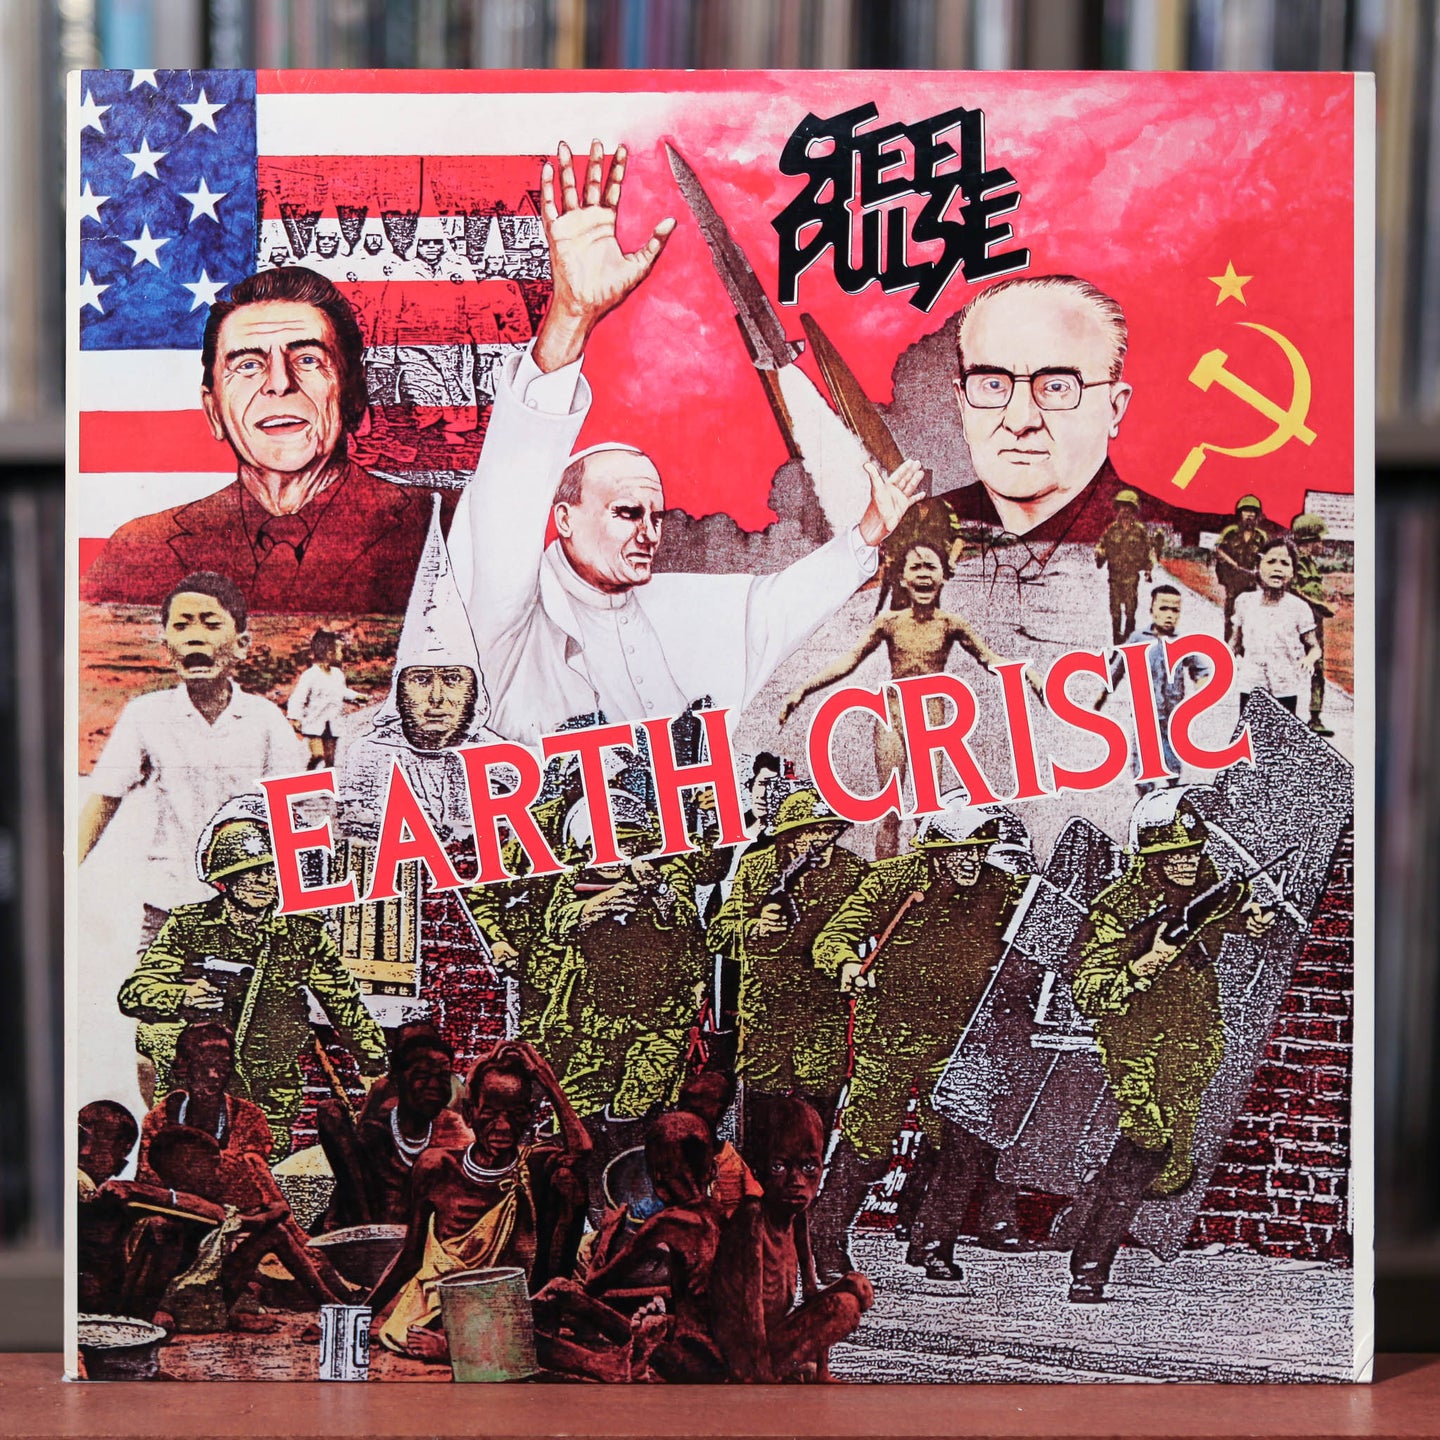 Steel Pulse - Earth Crisis - 1984 Elektra, EX/EX